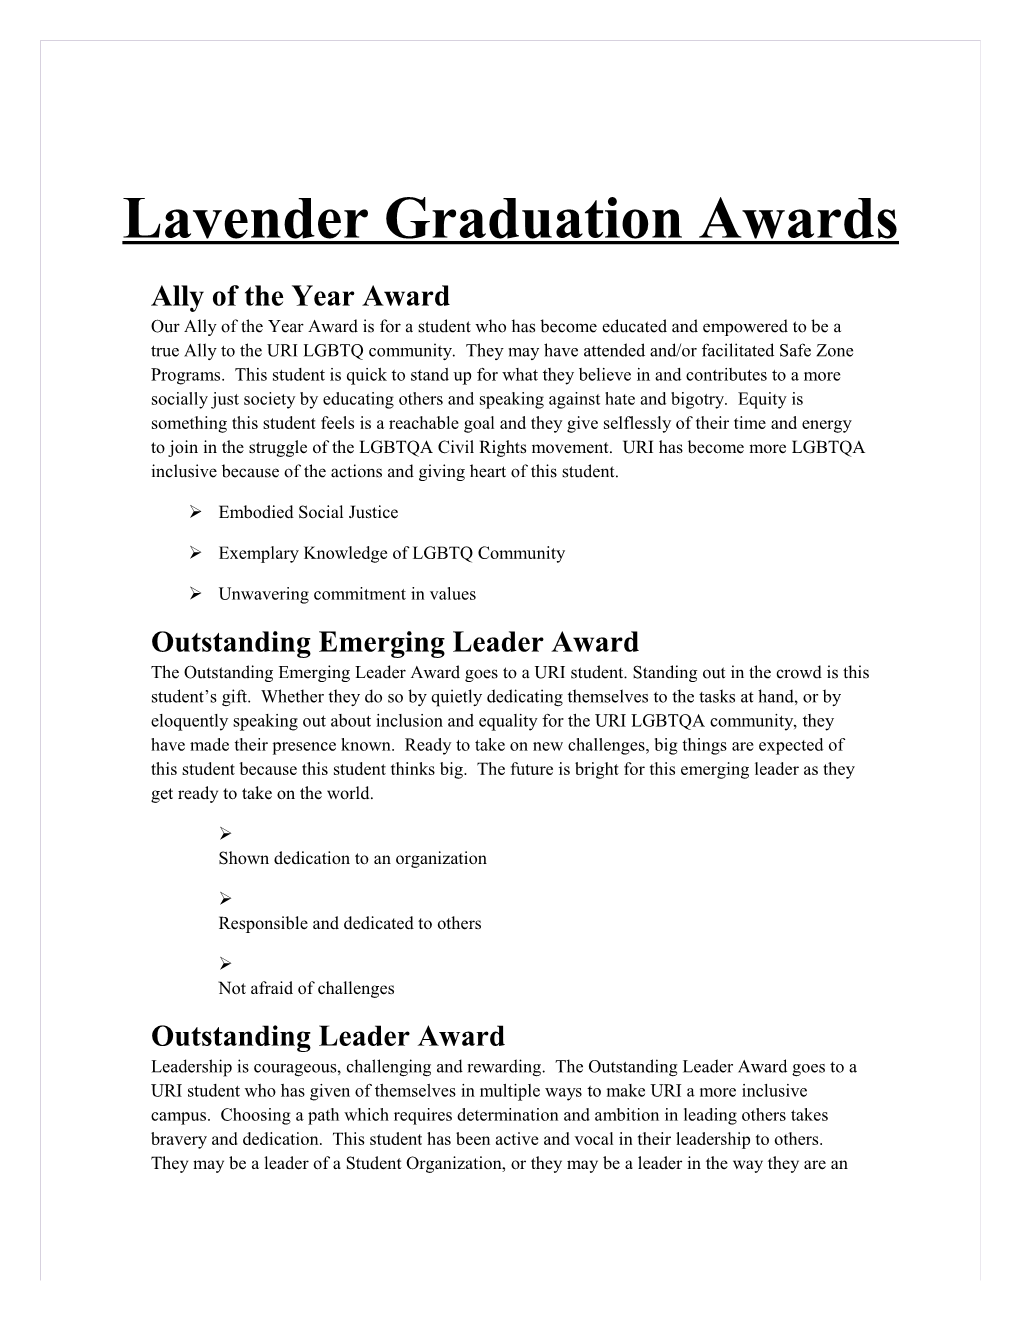 Lavender Graduation Awards